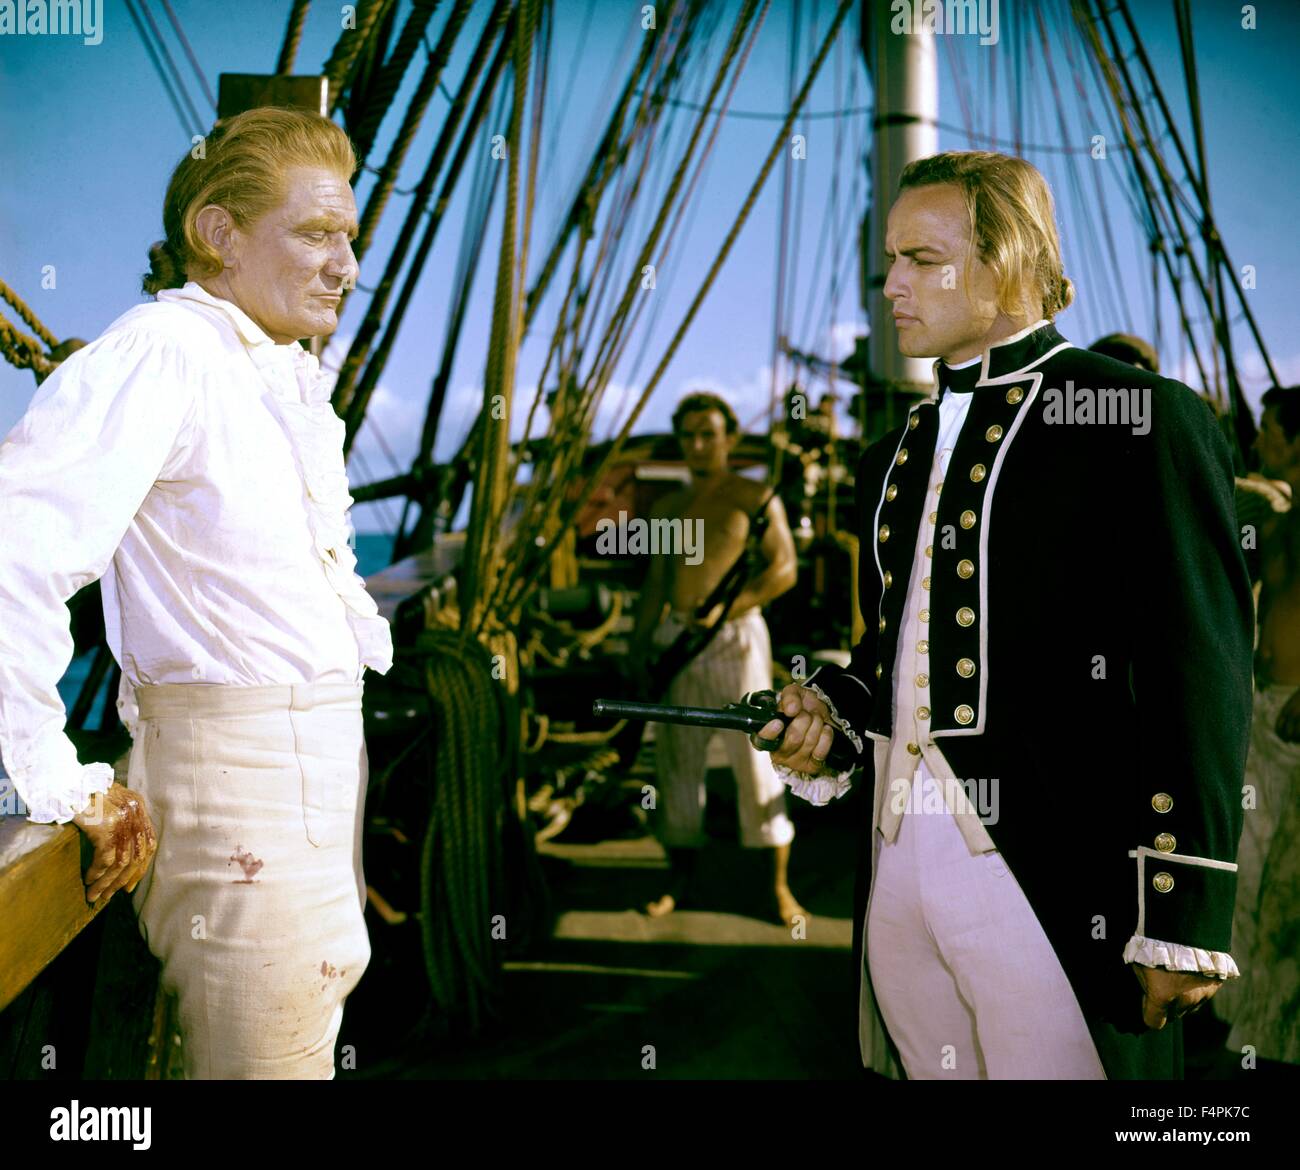 Marlon Brando / Mutiny on the Bounty / 1962 directed by Lewis Milestone  [Metro-Goldwin-Mayer Pictures] Stock Photo